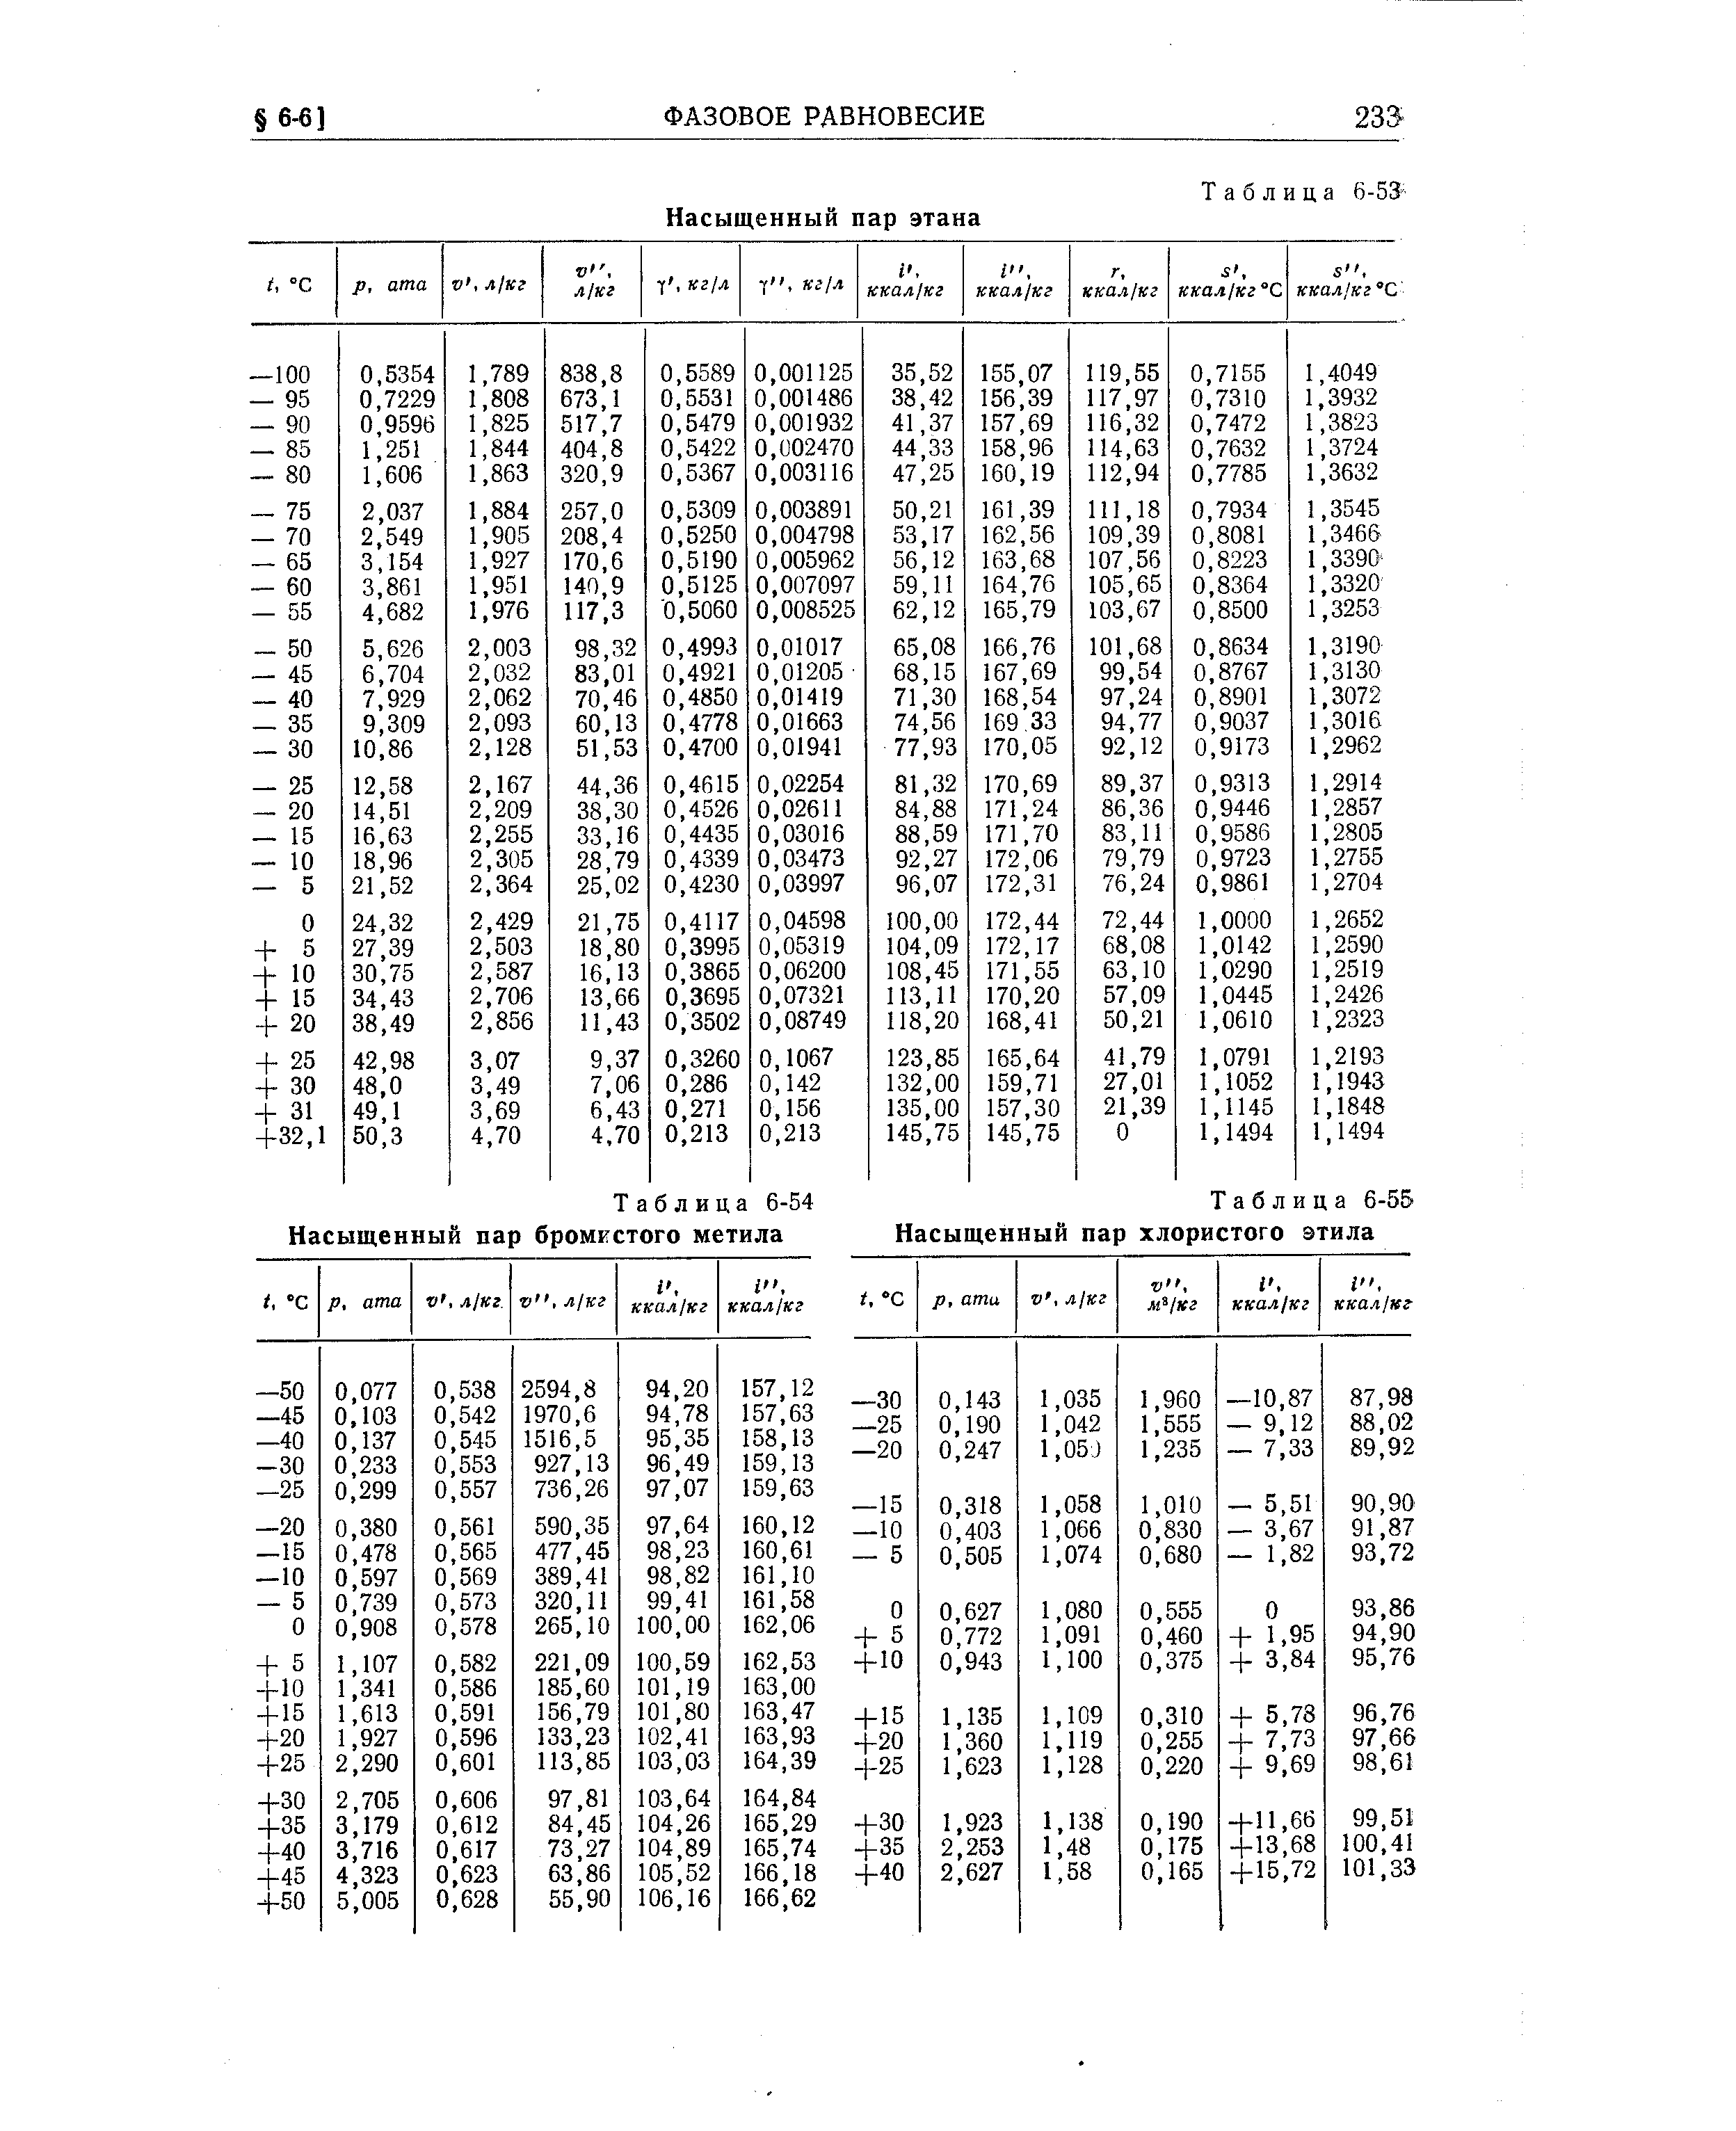 Таблица 6-54 Насыщенный пар бромистого метила
